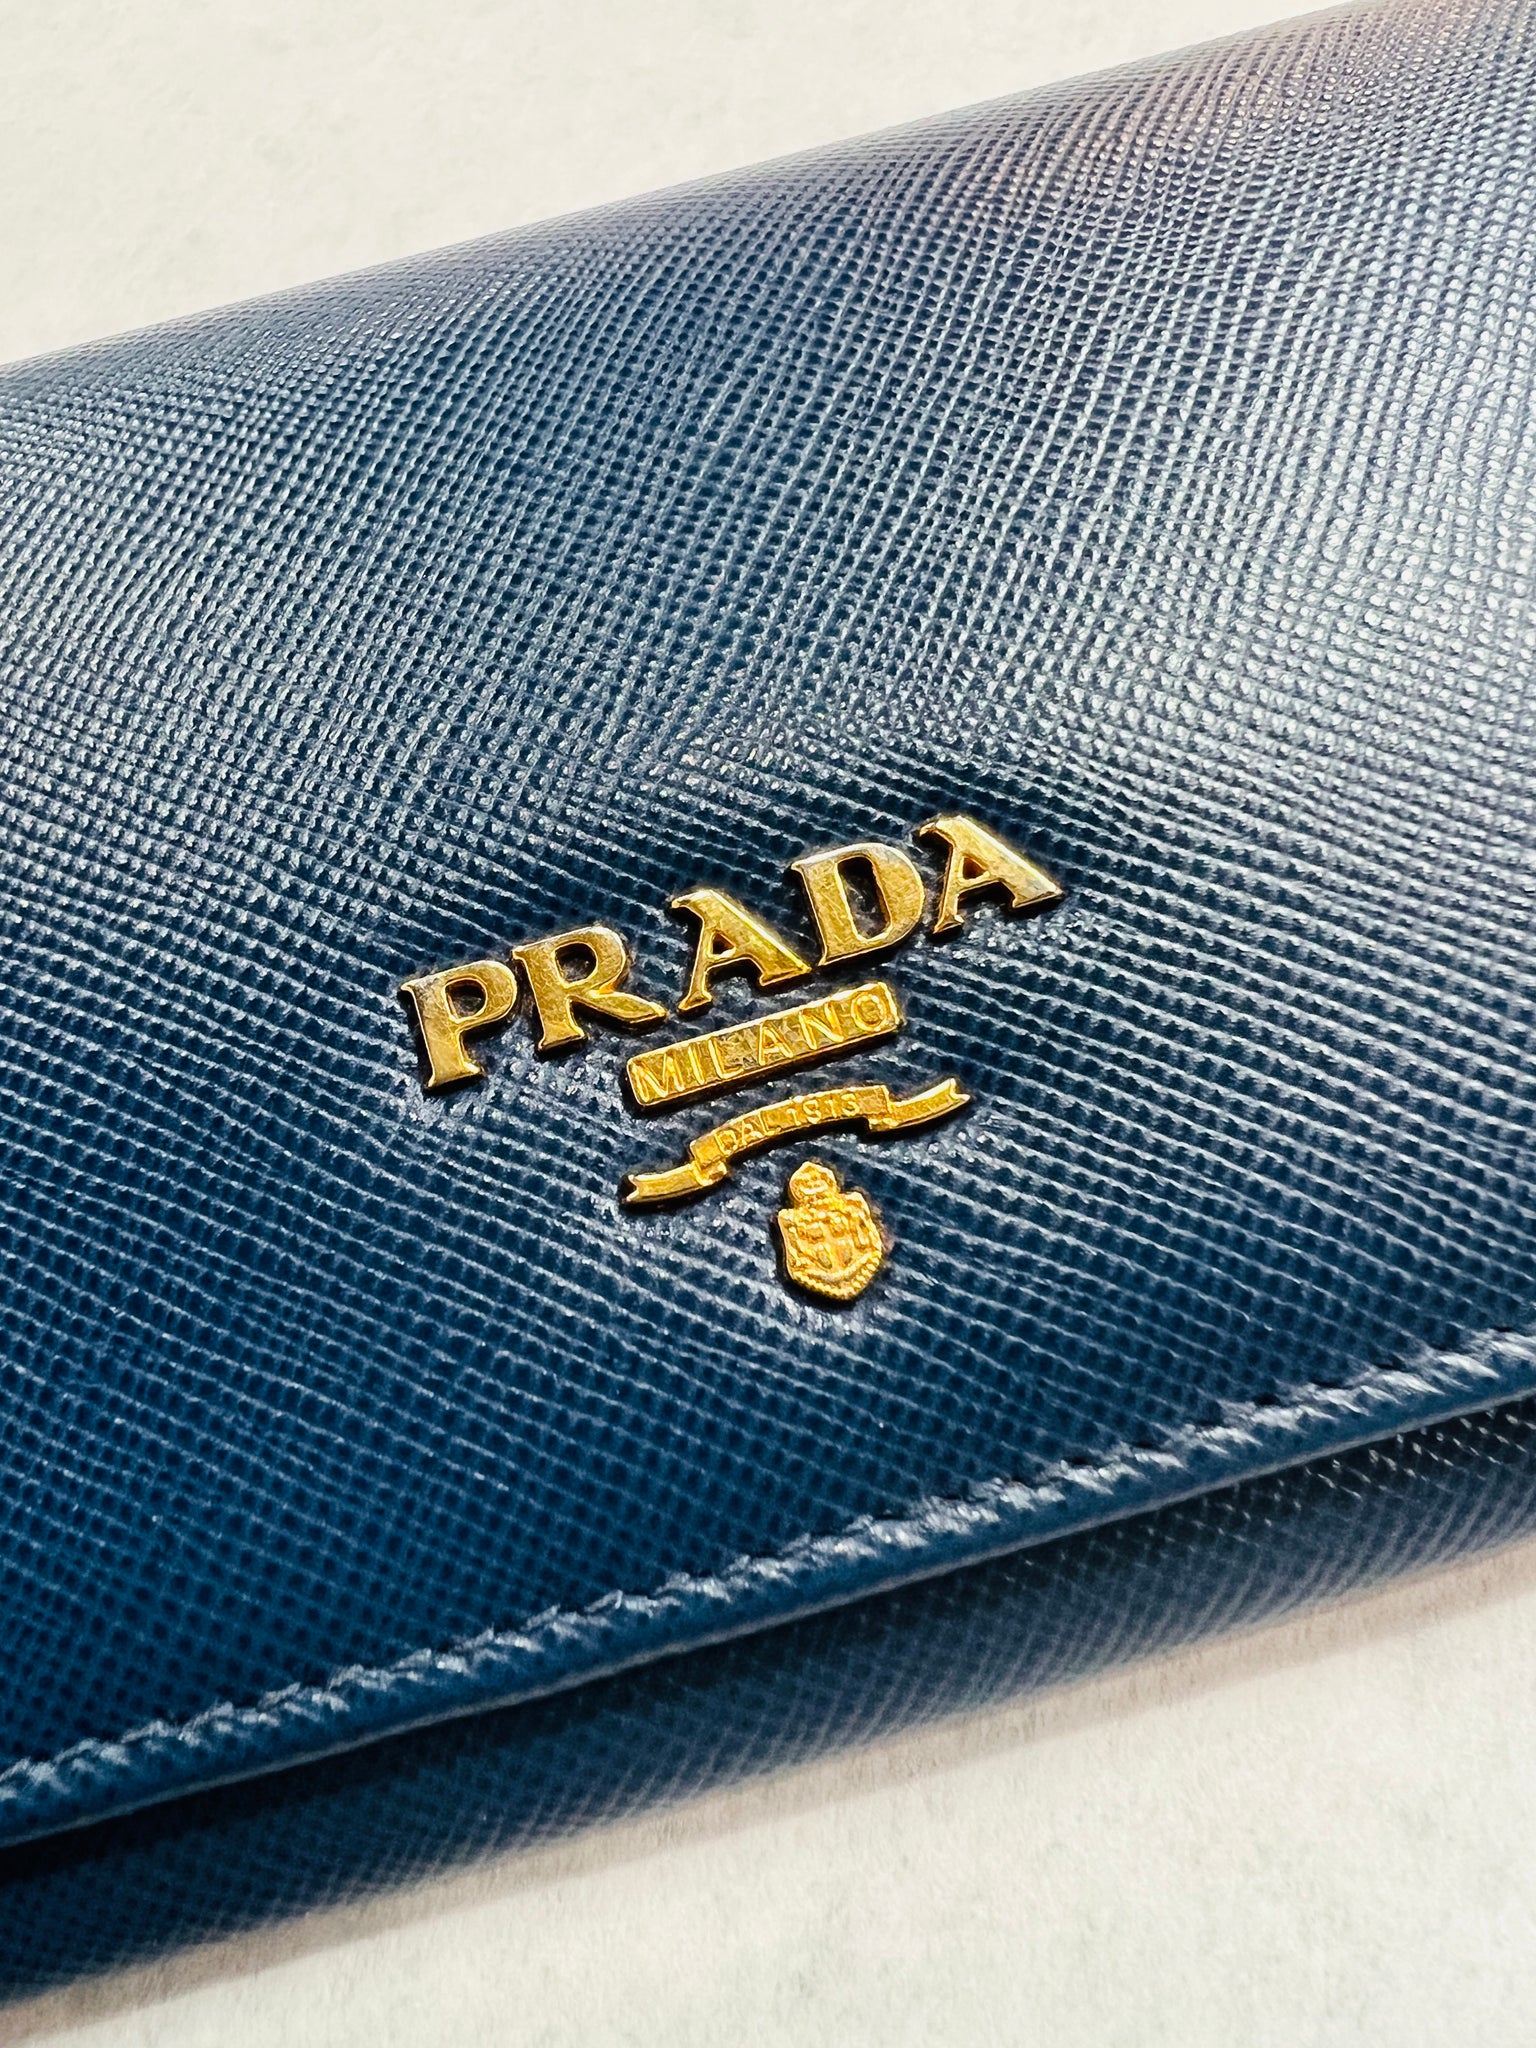 Authentic Prada Saffiano Blue Leather Zip Around Wallet